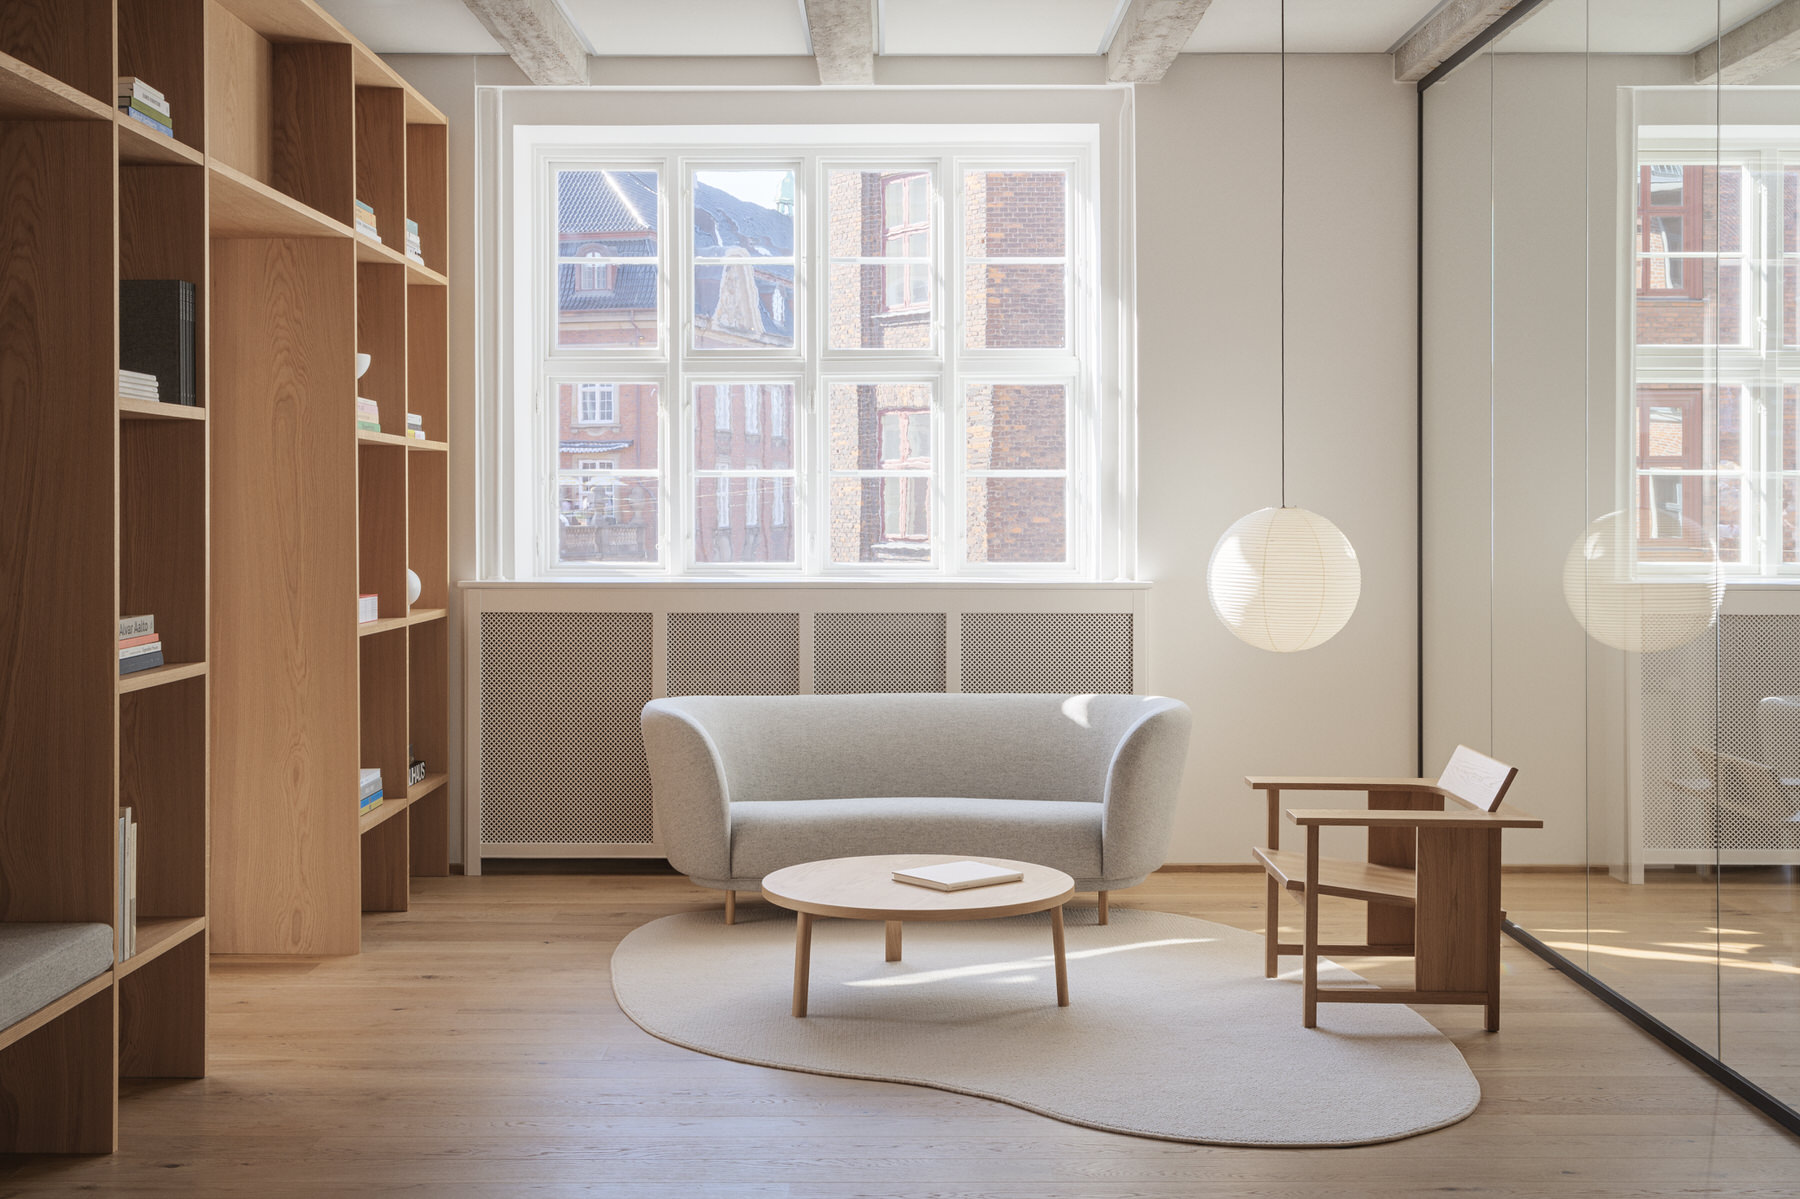 Work & Co Office in Copenhagen | Office Design Inspiration | Softer Volumes